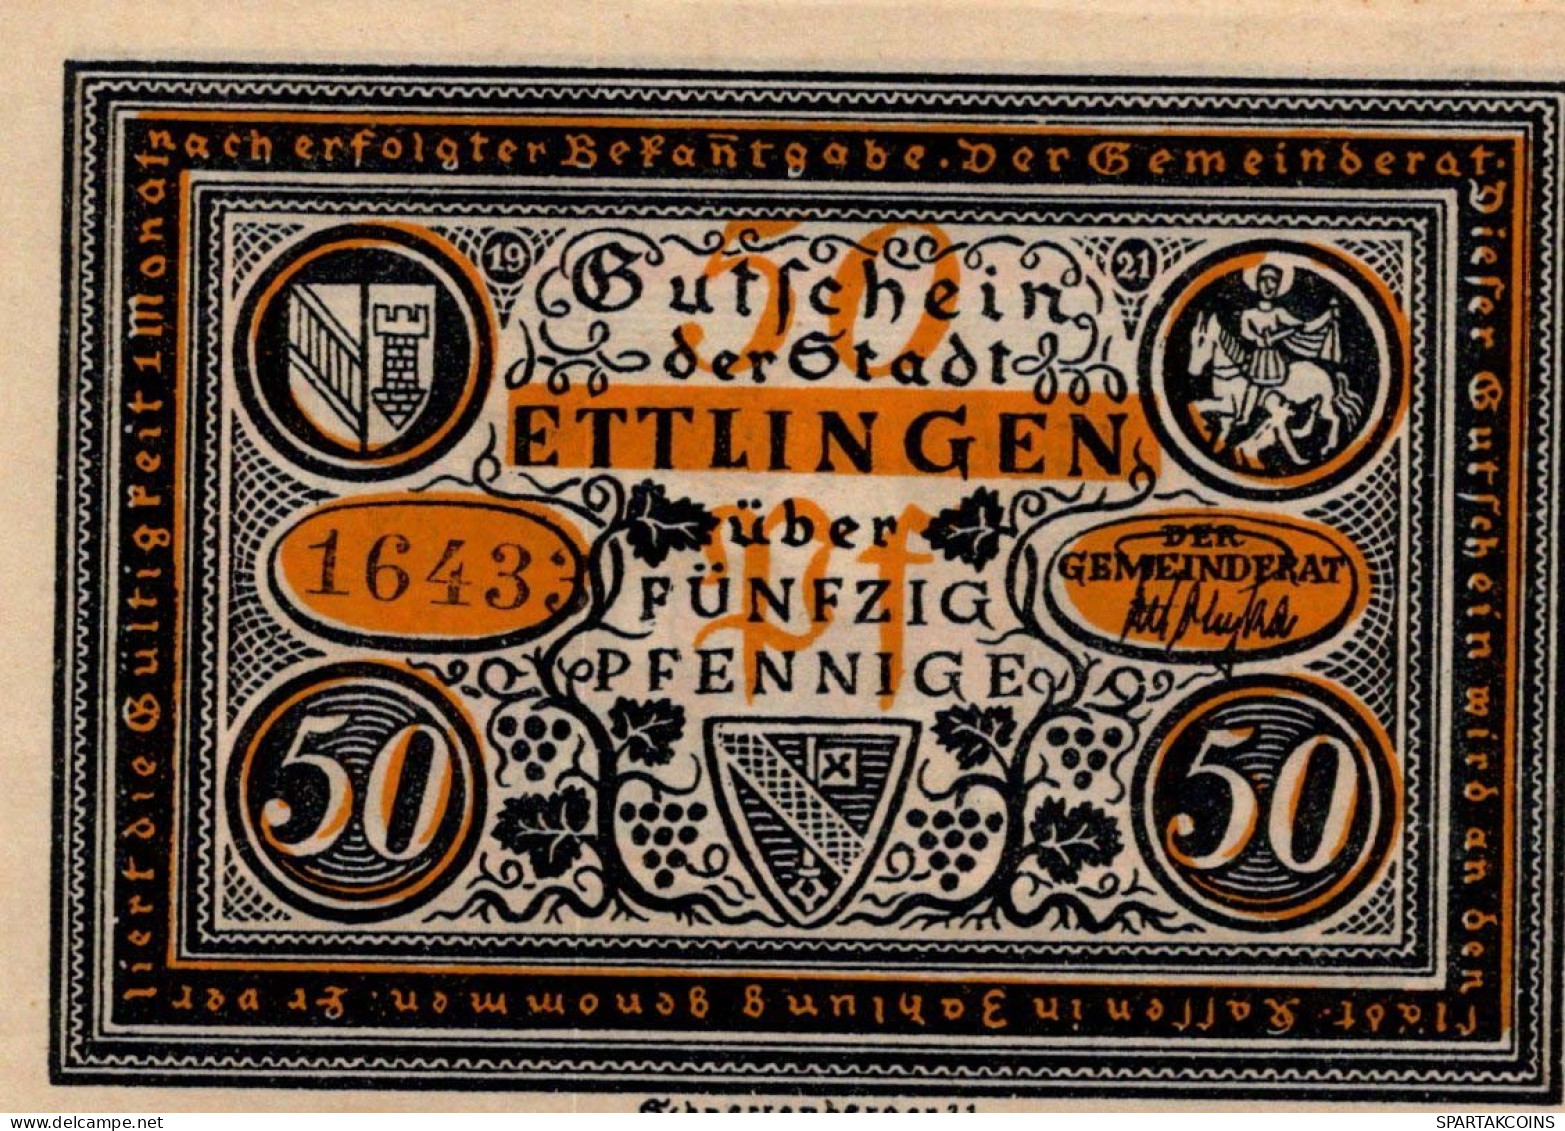 50 PFENNIG 1921 Stadt ETTLINGEN Baden UNC DEUTSCHLAND Notgeld Banknote #PB370 - [11] Local Banknote Issues